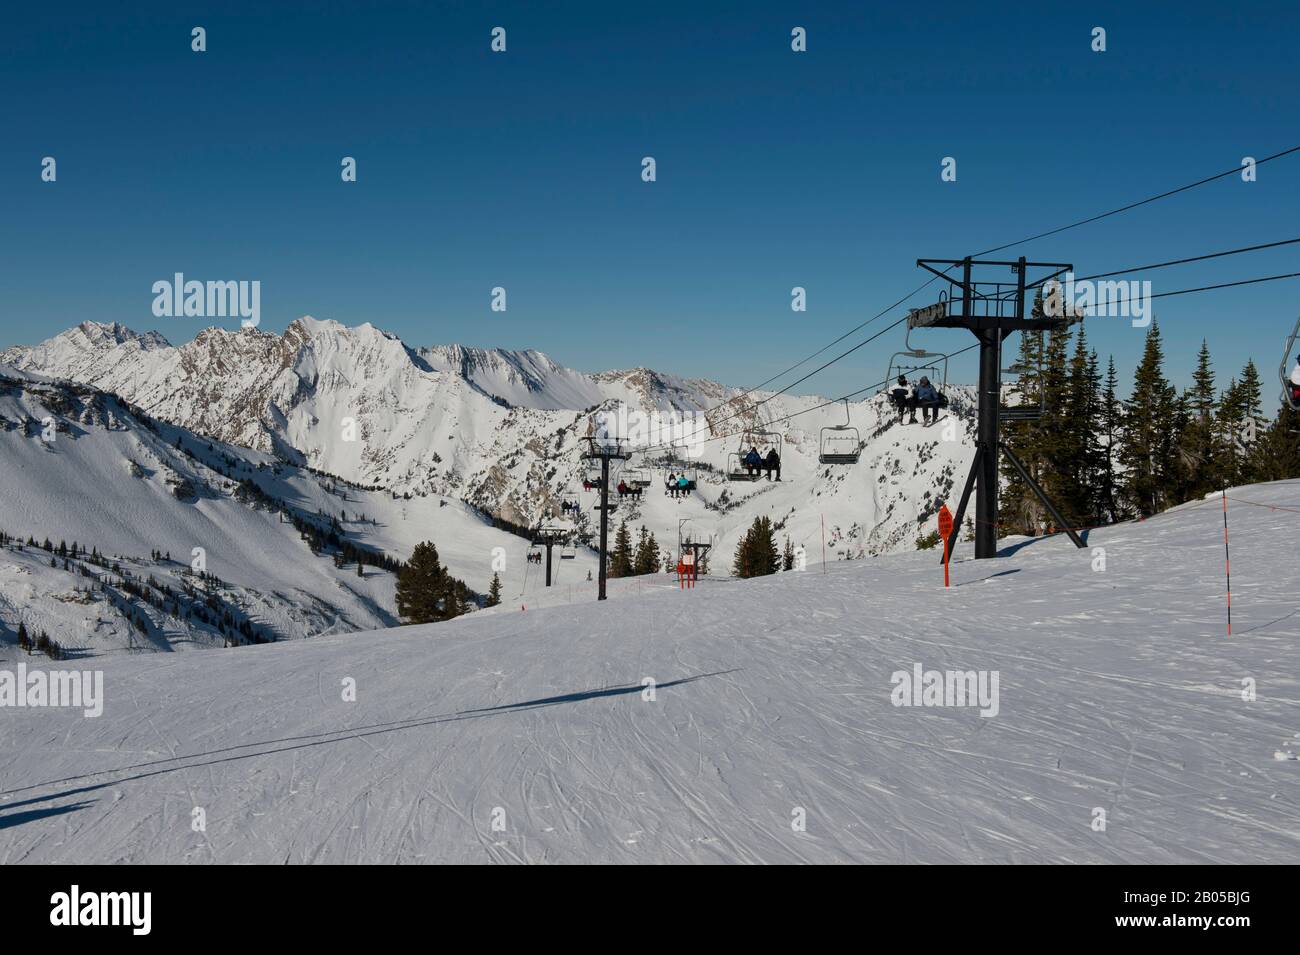 Utah Ski Resorts Stock Photos & Utah Ski Resorts Stock Images - Alamy